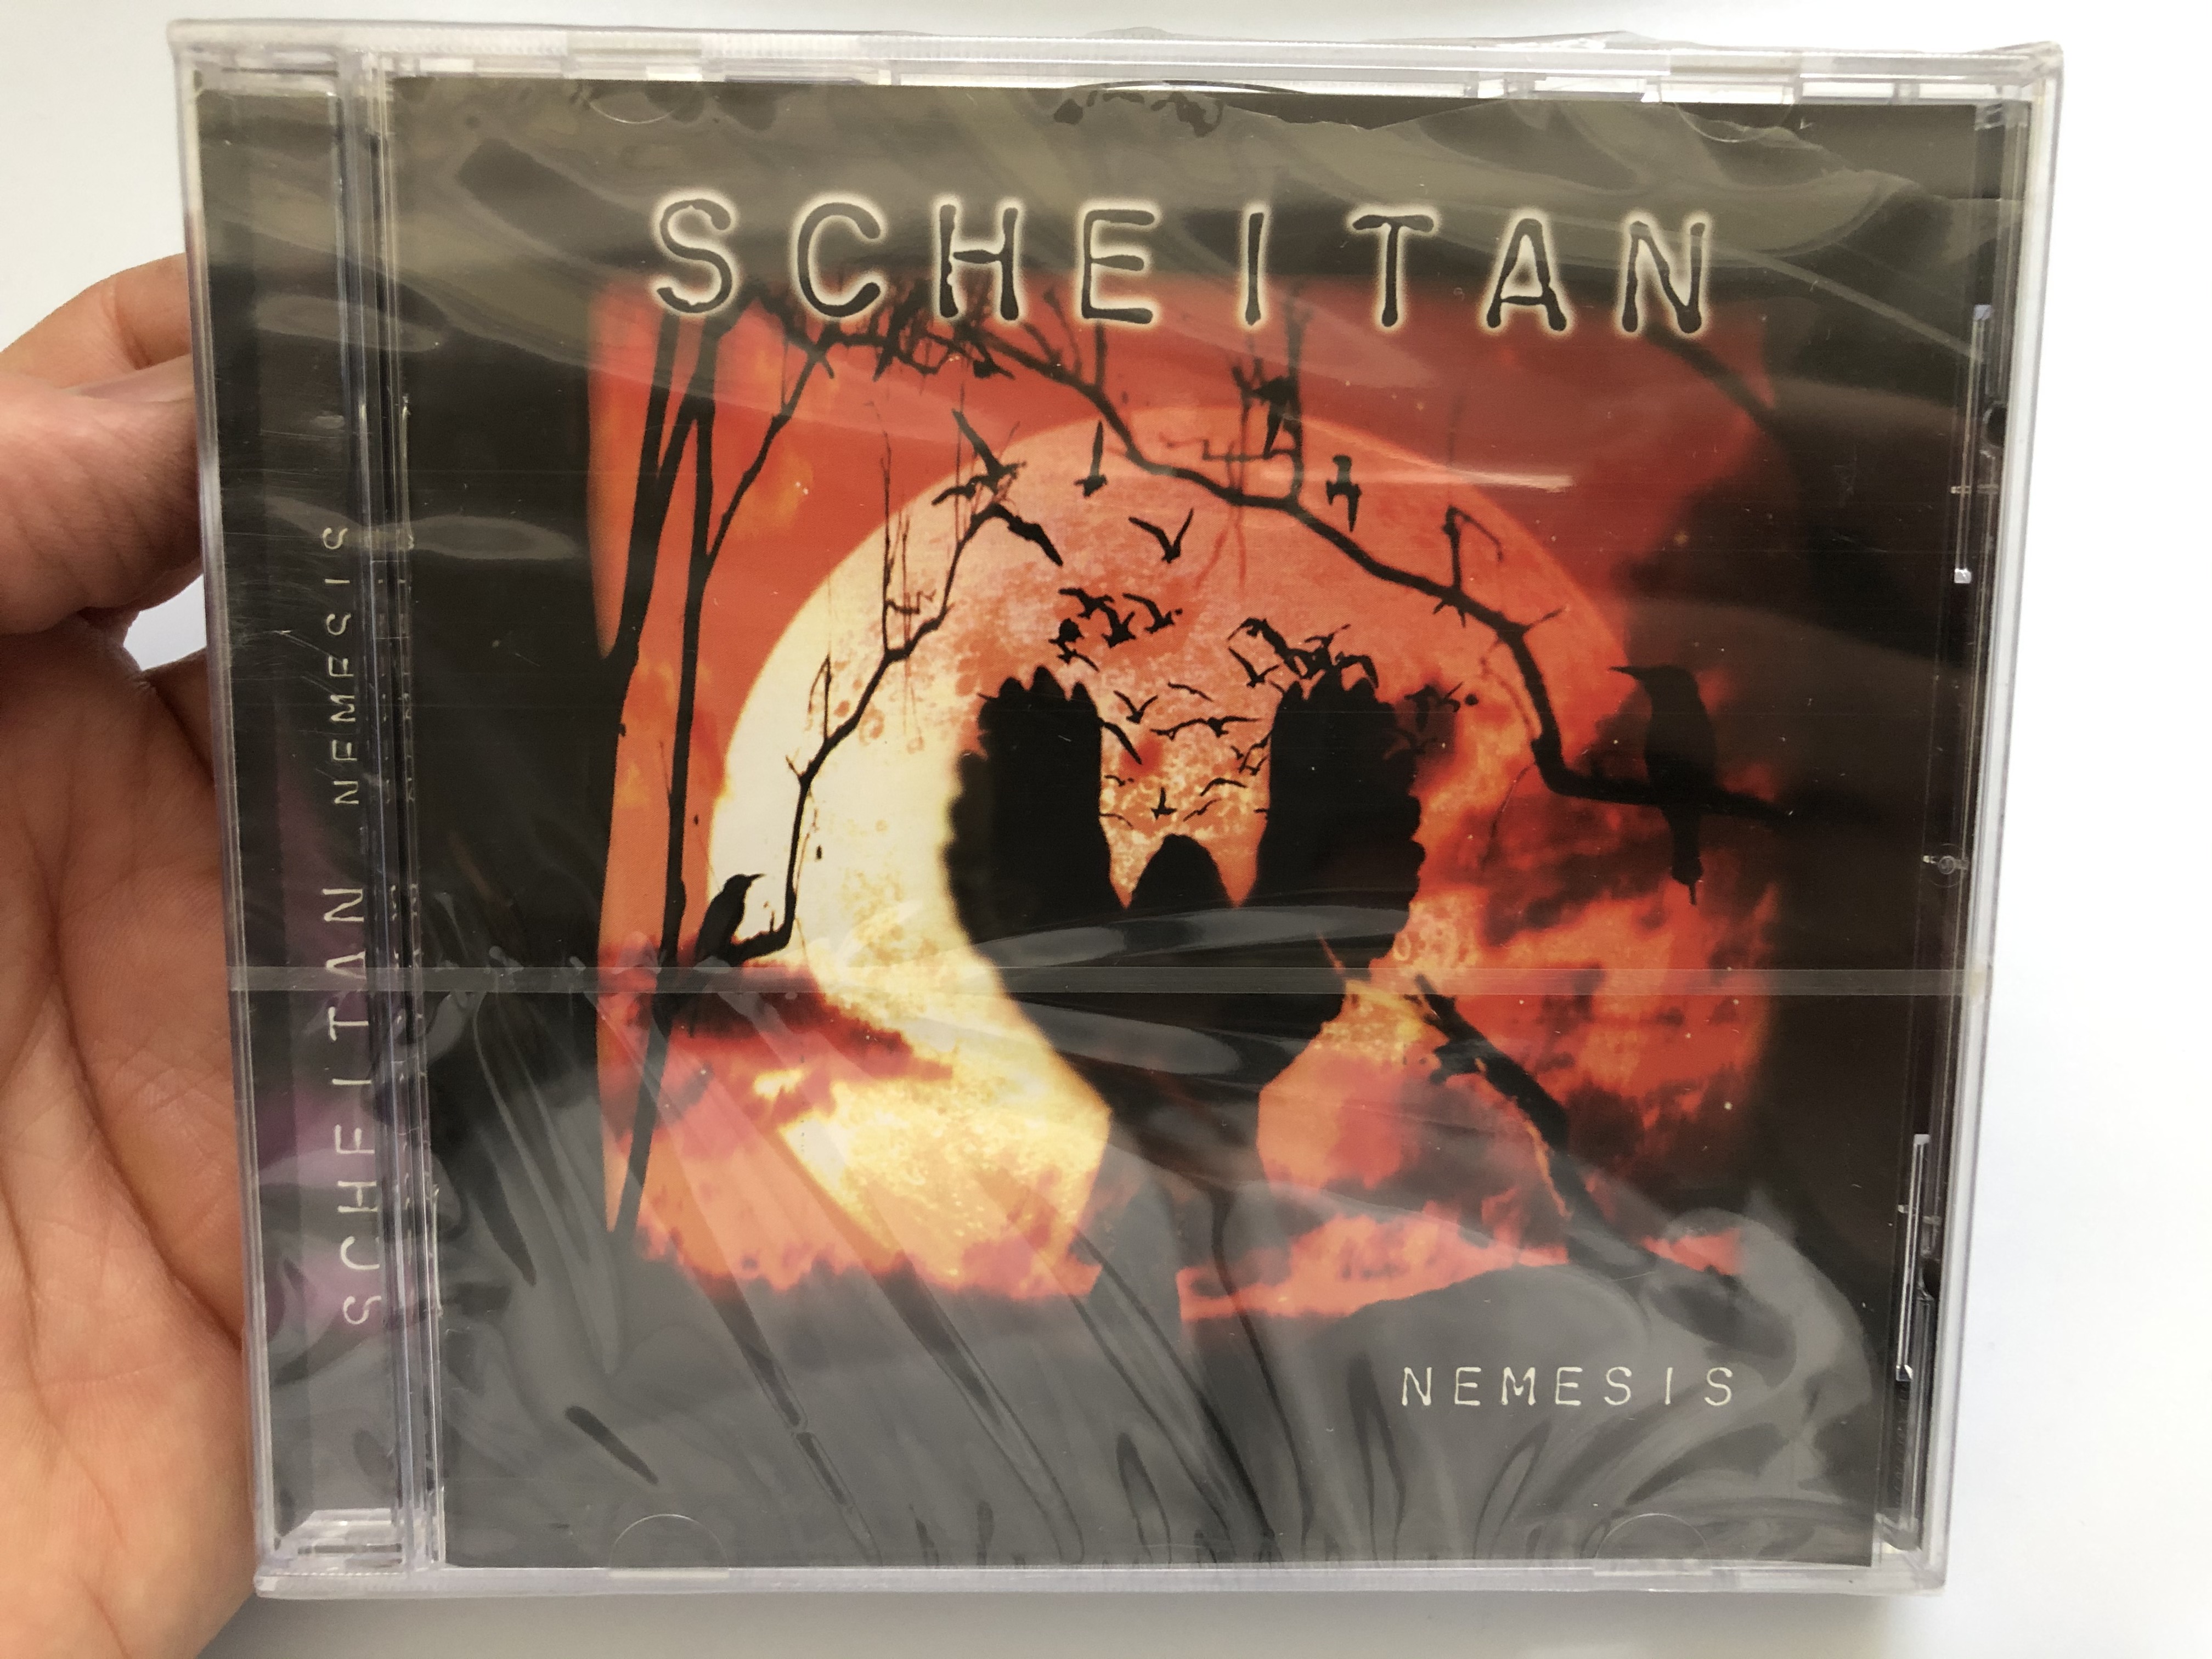 scheitan-nemesis-century-media-audio-cd-1999-77261-2-1-.jpg